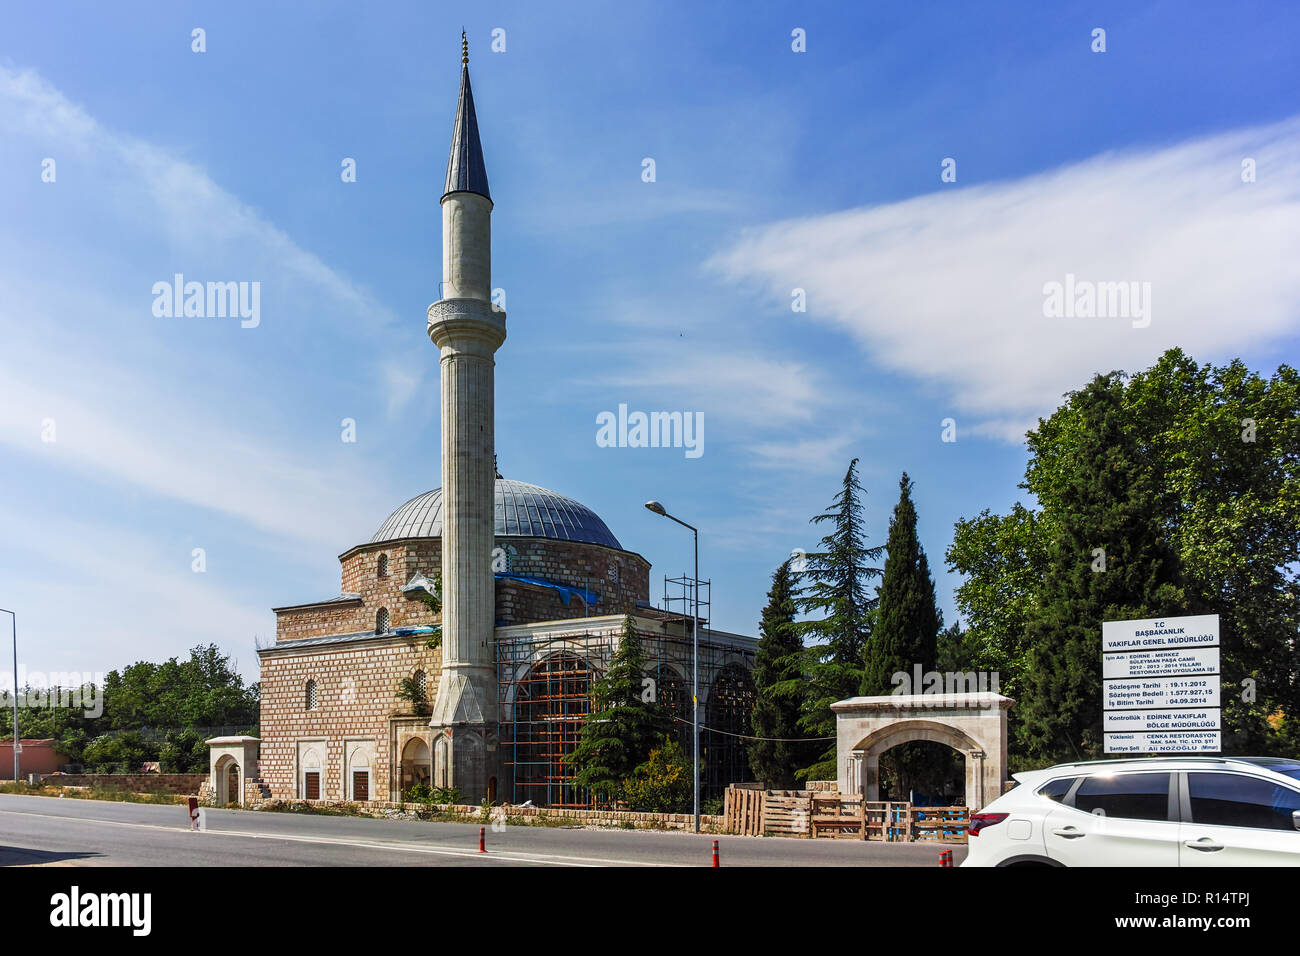 EDIRNE, Türkei - 26. MAI 2018: Suleymaniye Moschee in Edirne, Osten Thrakien, Türkei Stockfoto